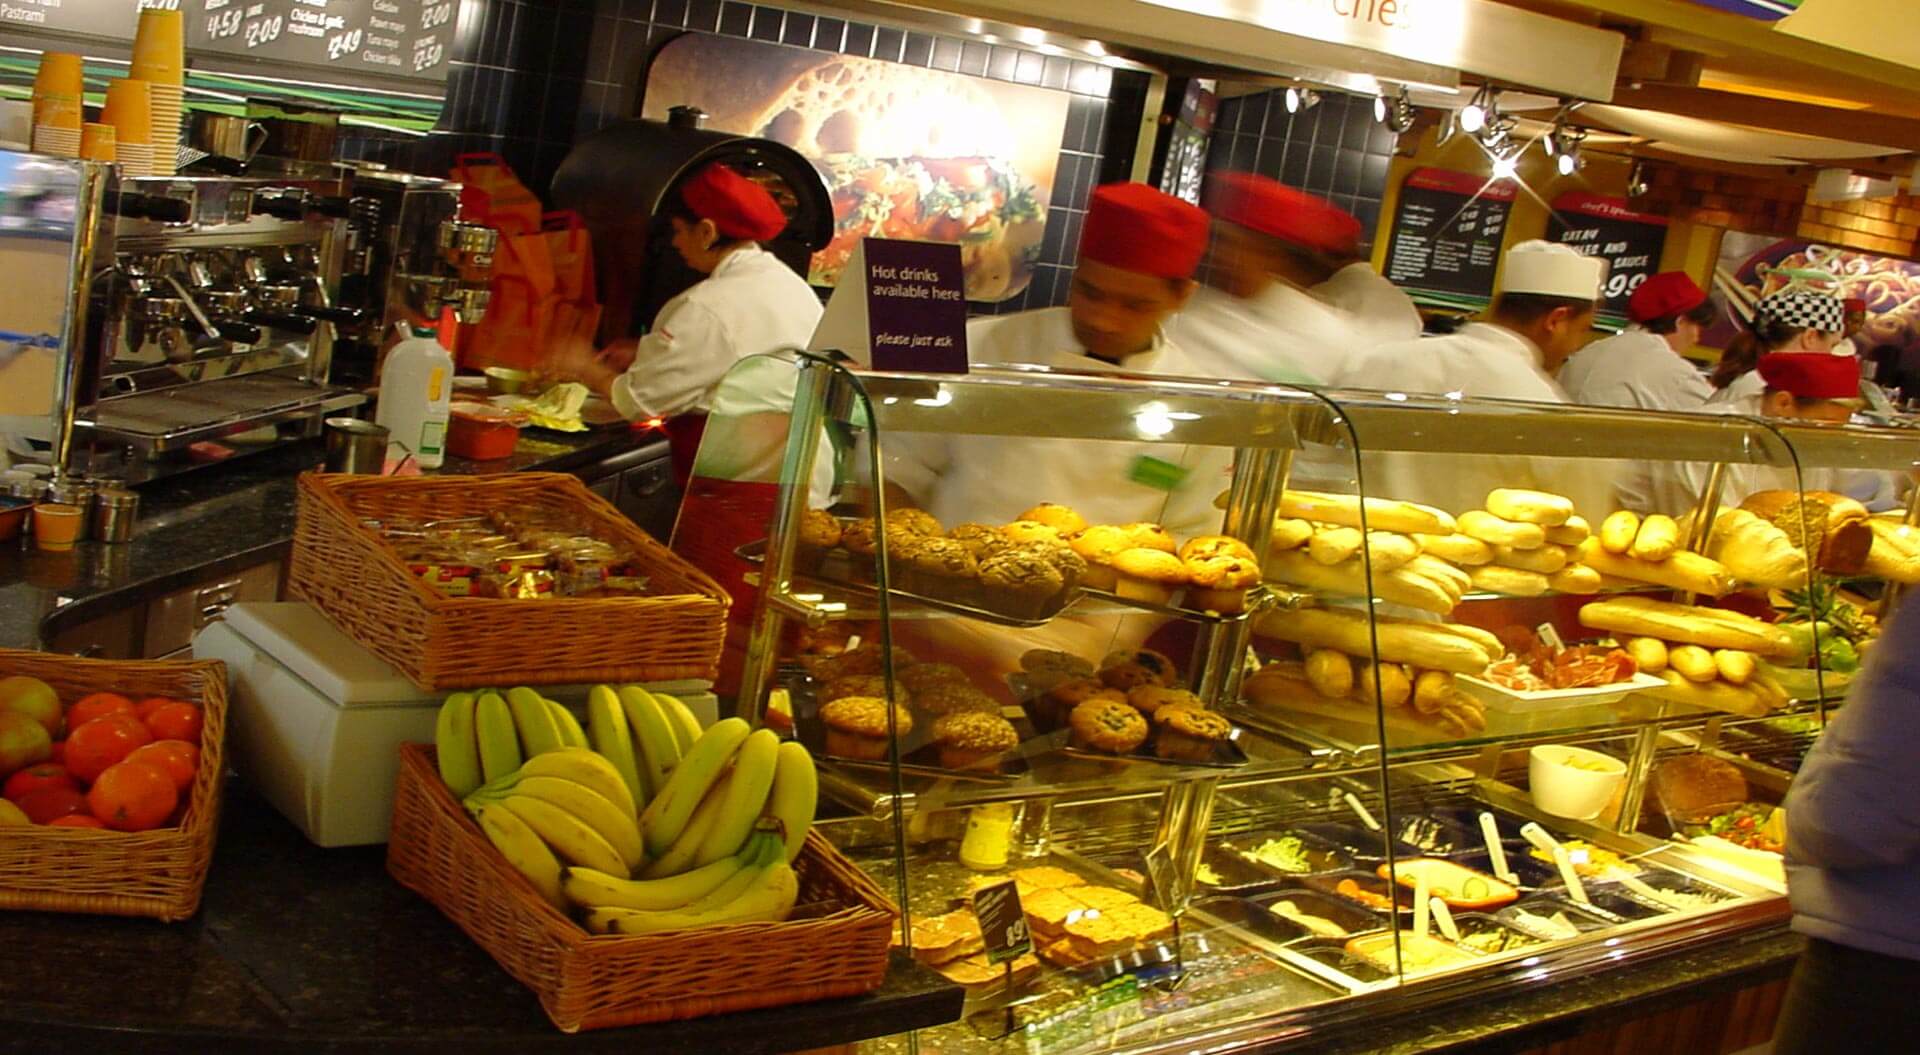 Safeway supermarket interior store design, merchandising display systems for takeaway bakery foods